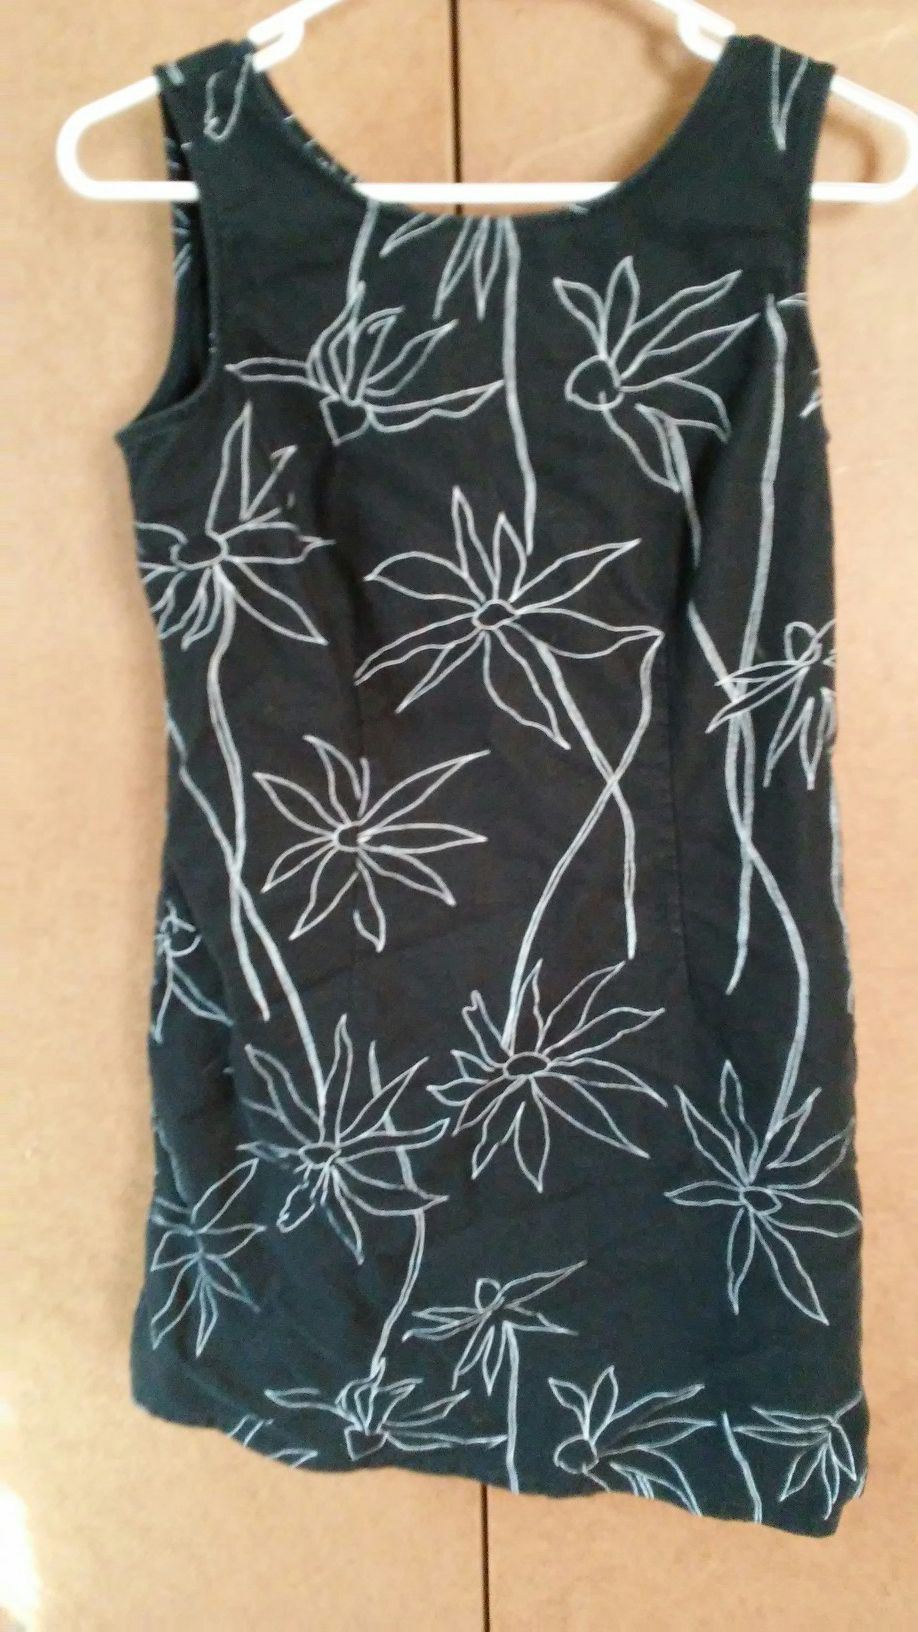 Kathy Lee Black Flower pattern sun dress sz Sm $10